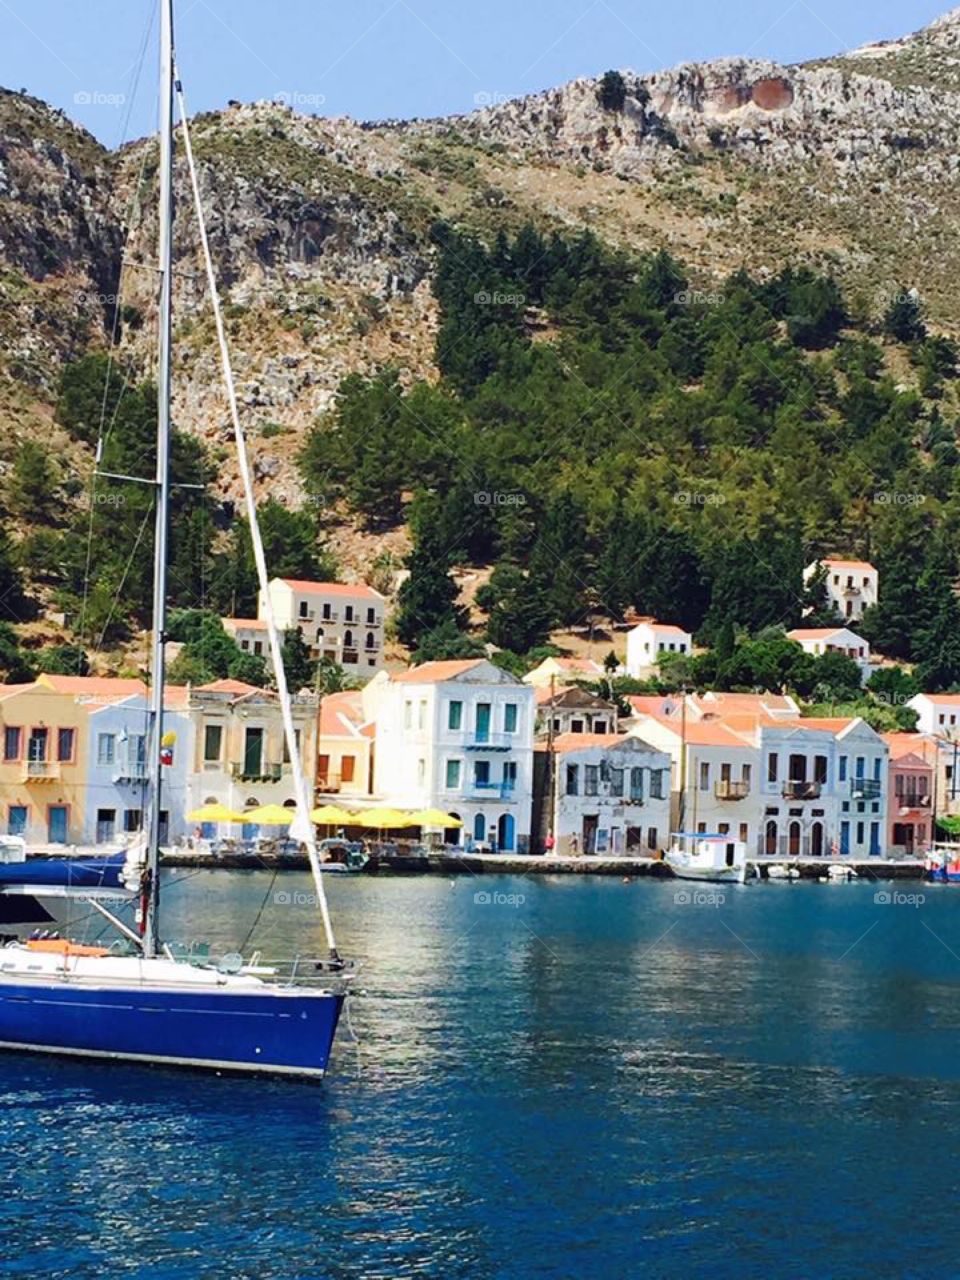 A Greek Island 